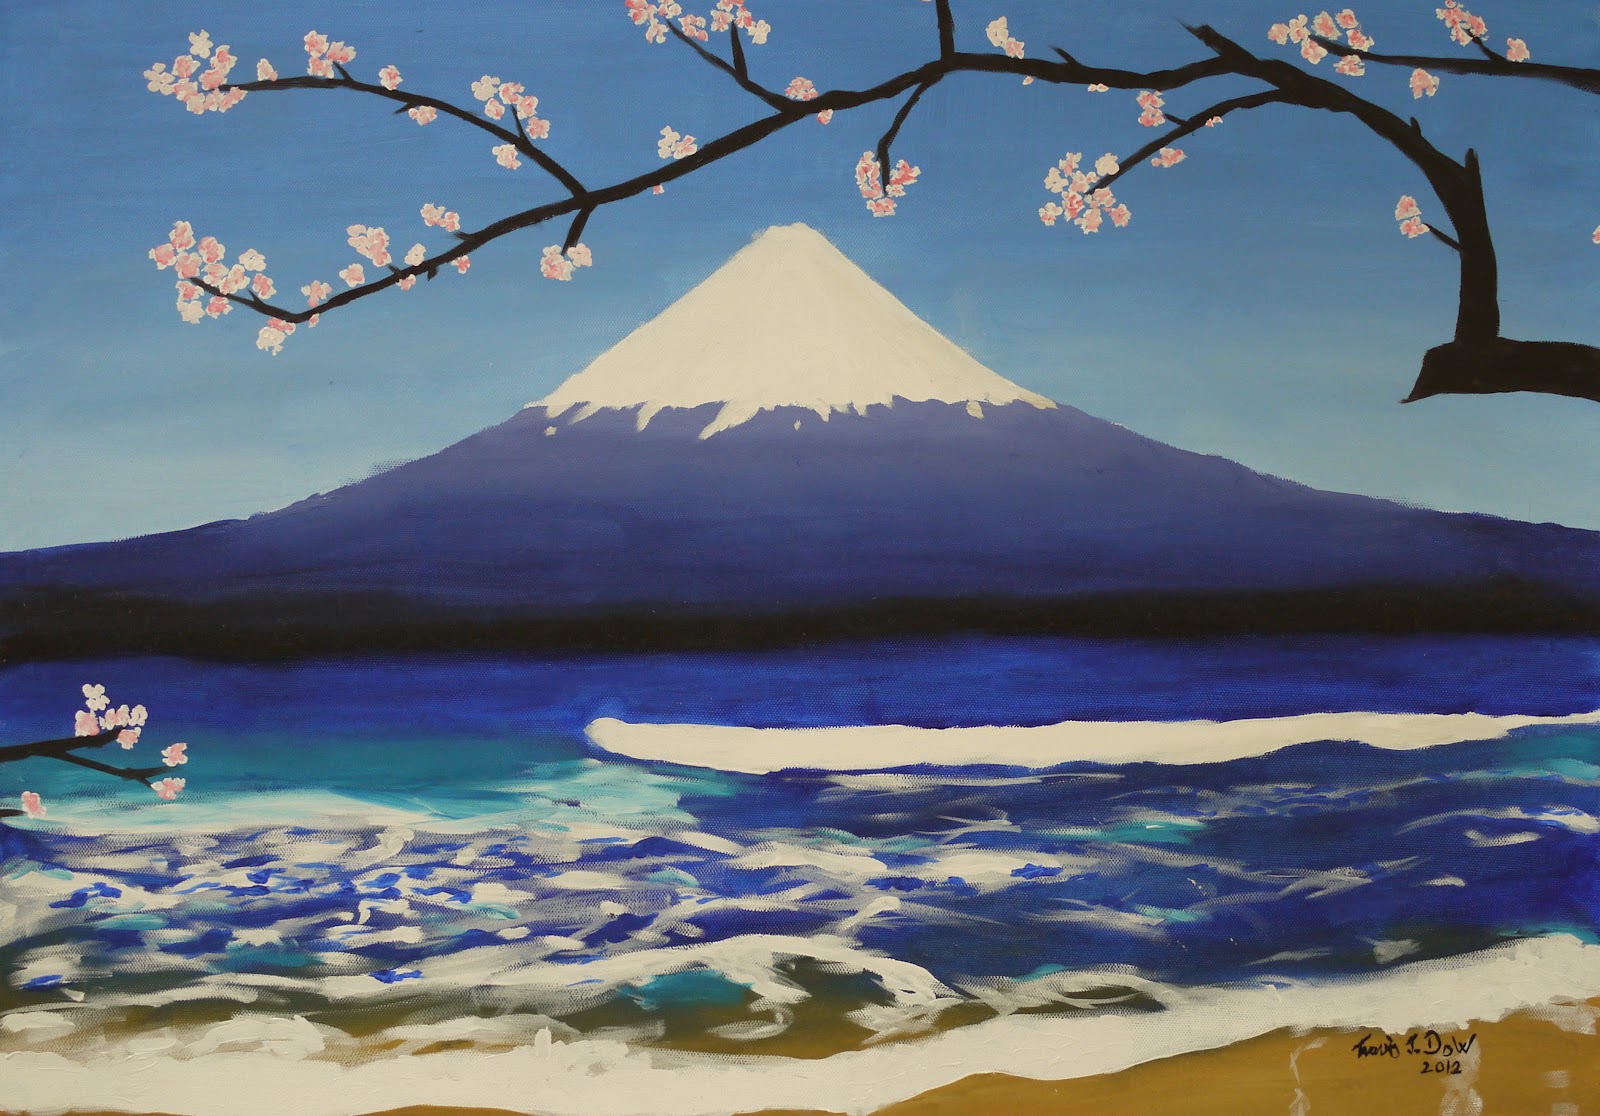 Mt Fuji Drawing at Explore collection of Mt Fuji